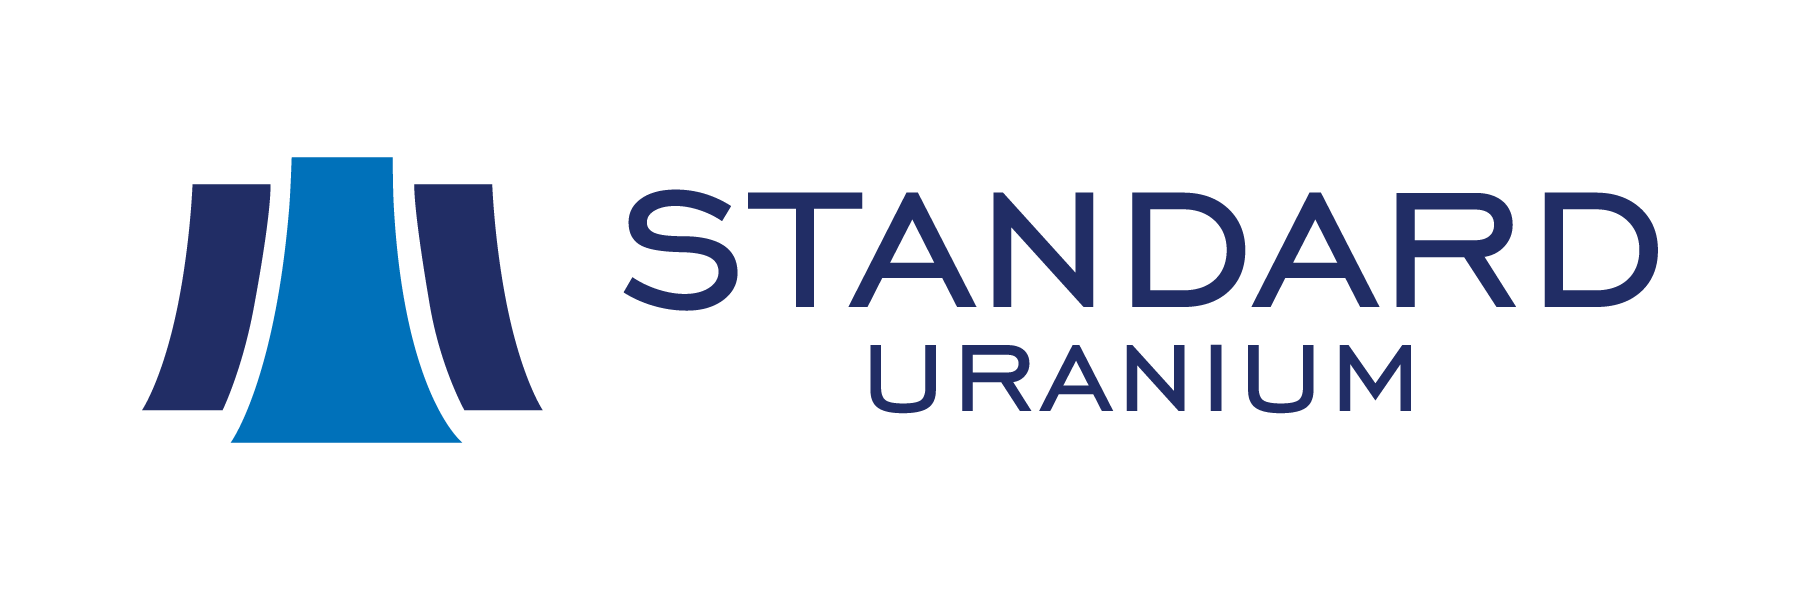 Standard Uranium.png